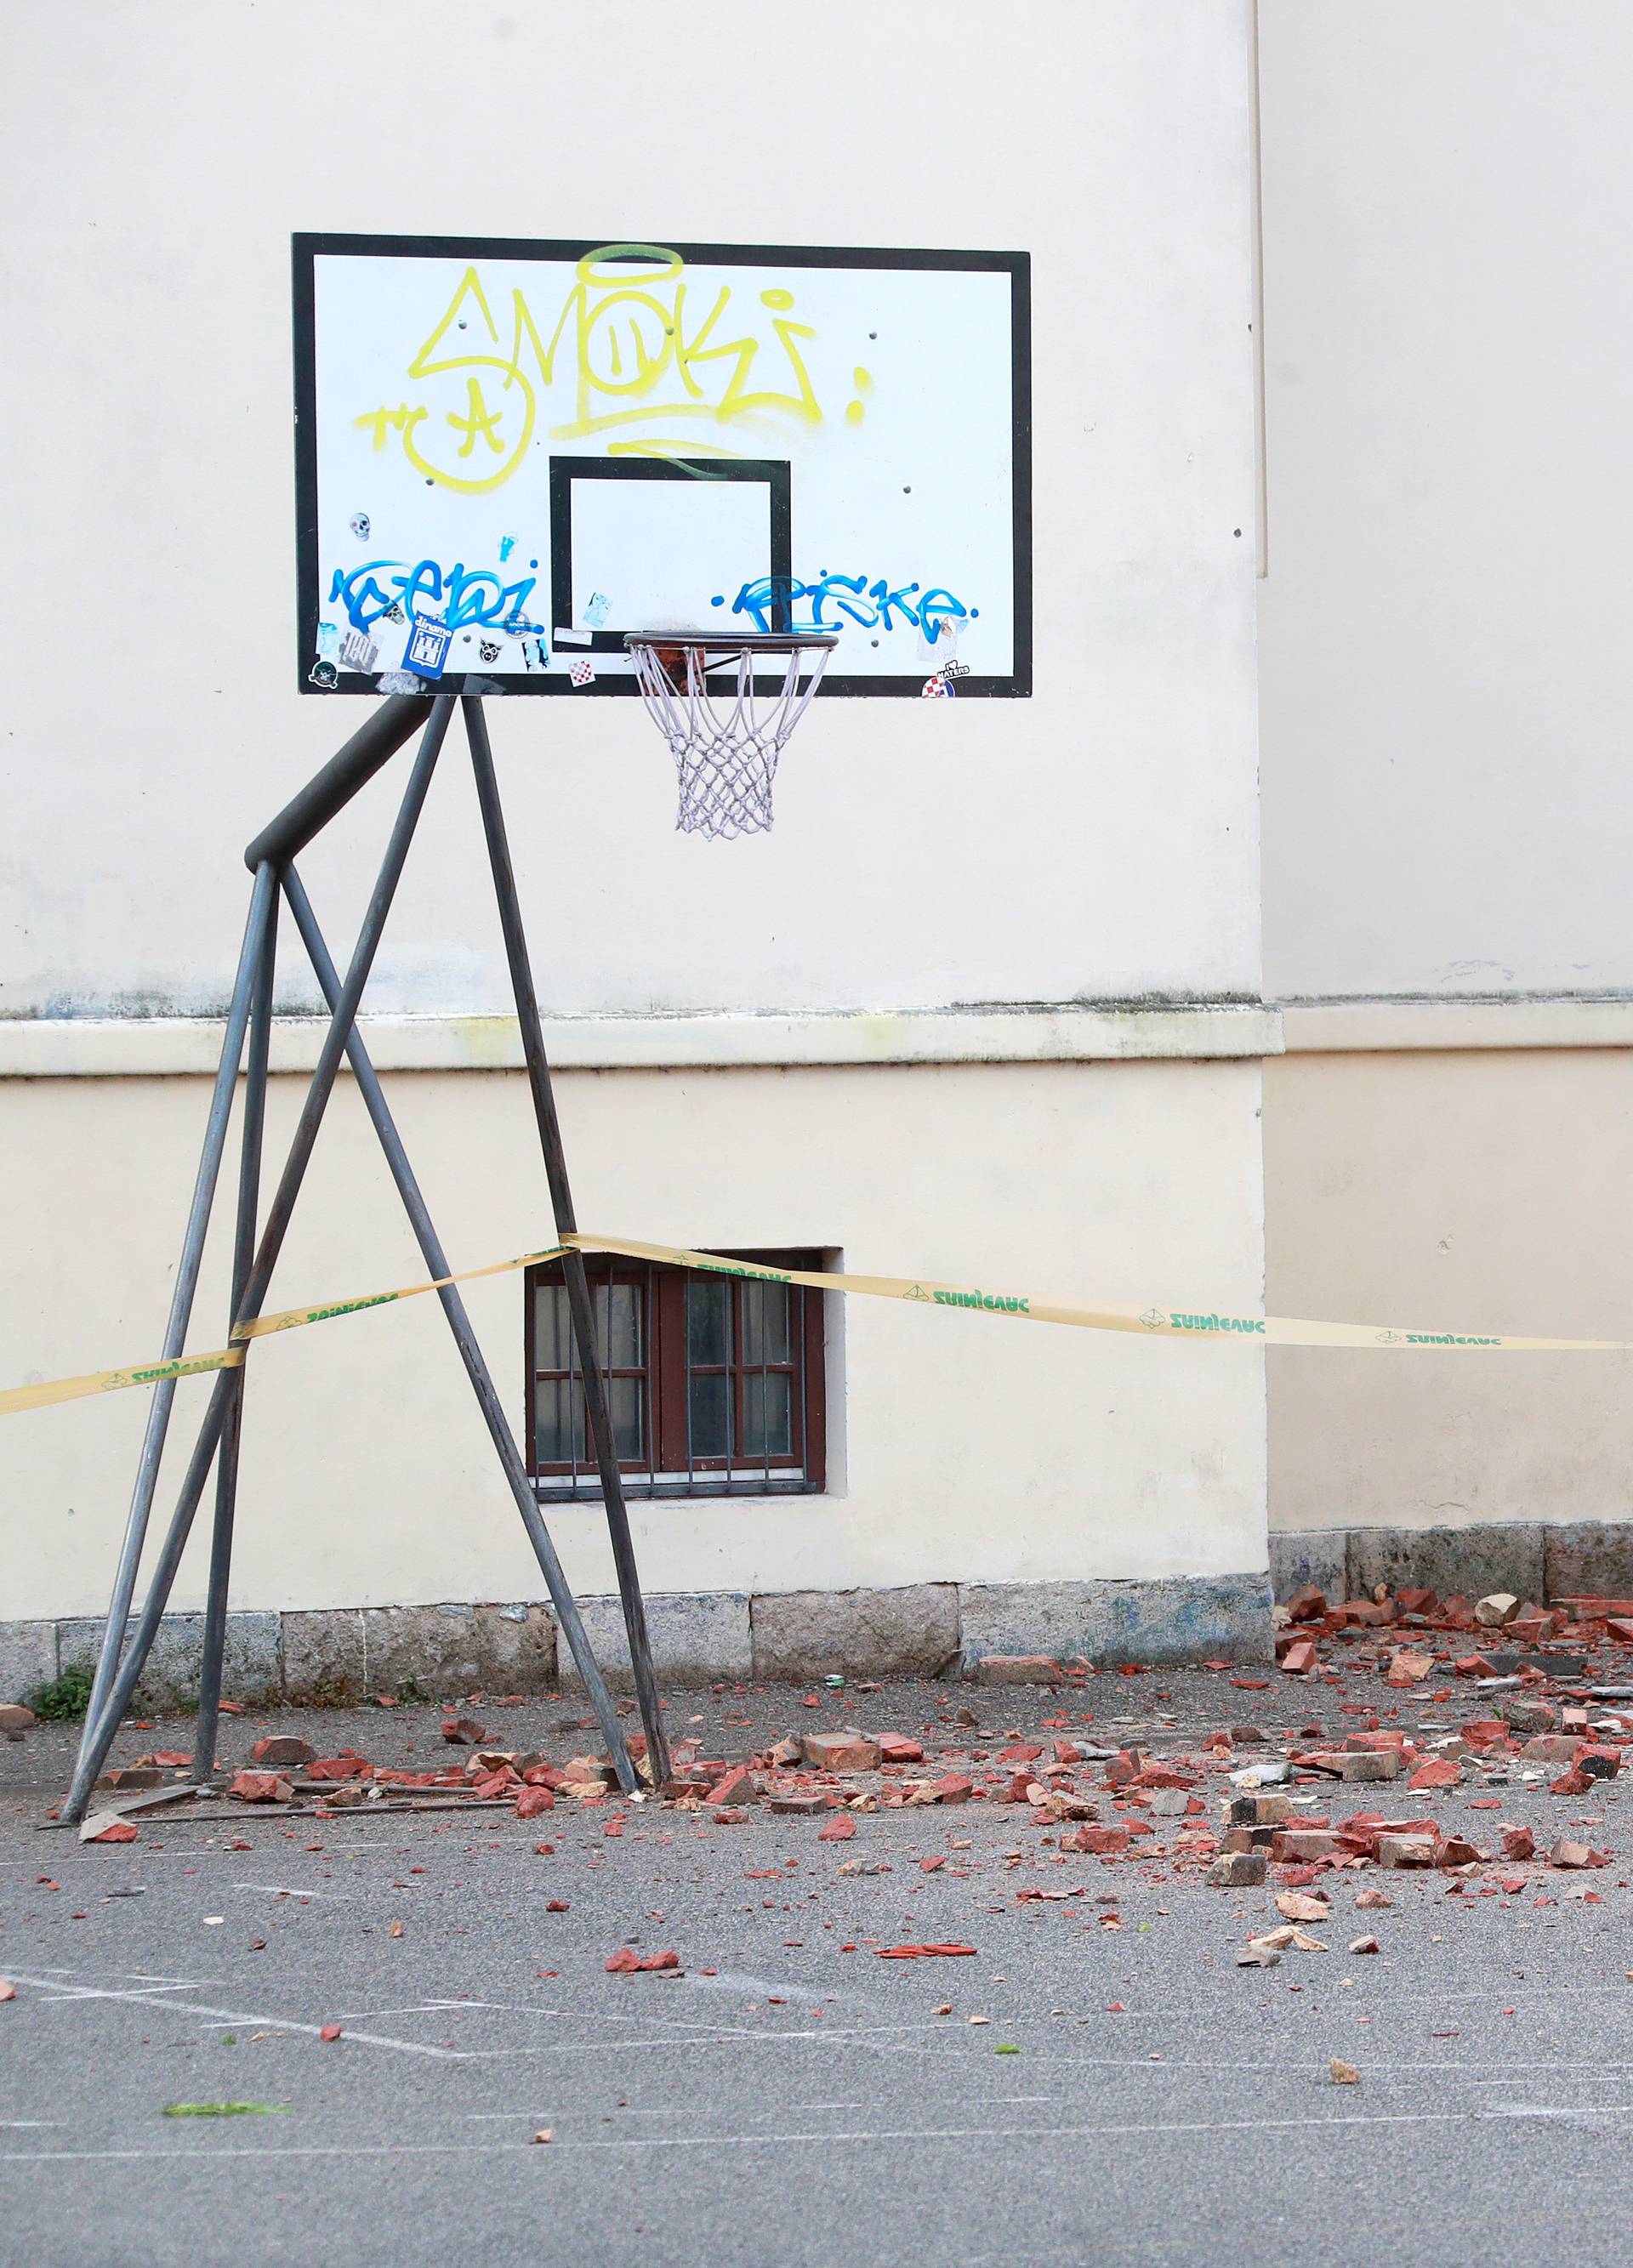 Zagreb: Vidljive posljedice potresa na  osnovnoj školi Josipa Jurja Strossmayera